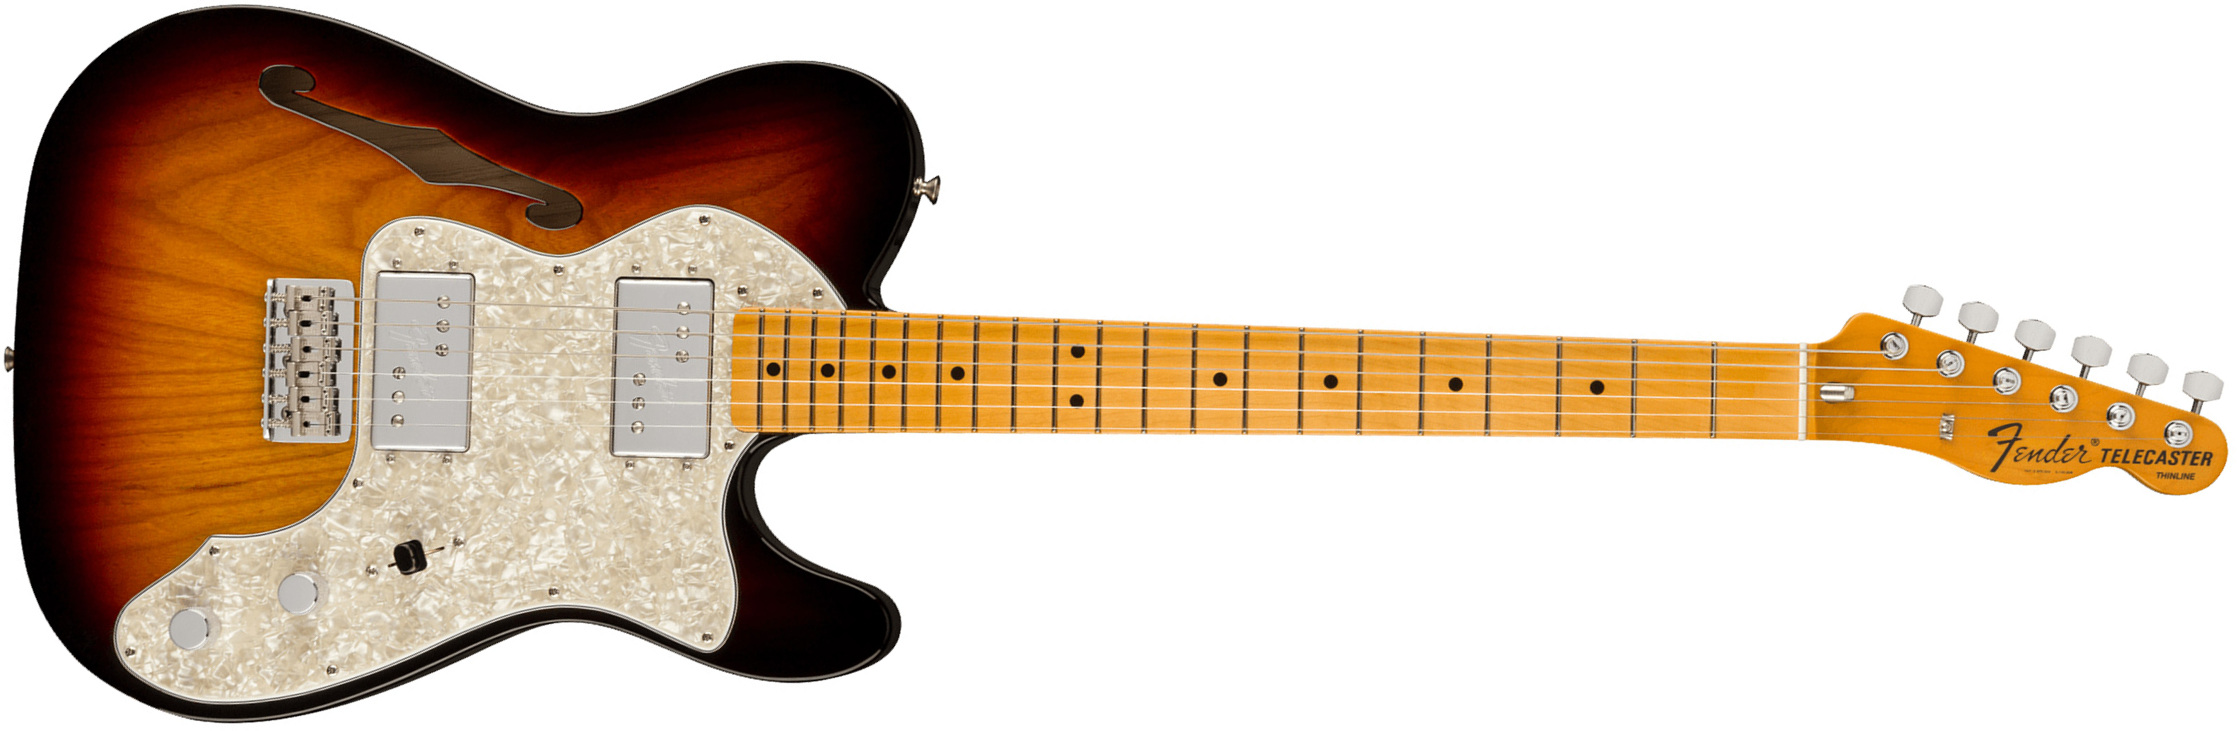 Fender Tele Thinline 1972 American Vintage Ii Usa 2h Ht Mn - 3-color Sunburst - Tel shape electric guitar - Main picture